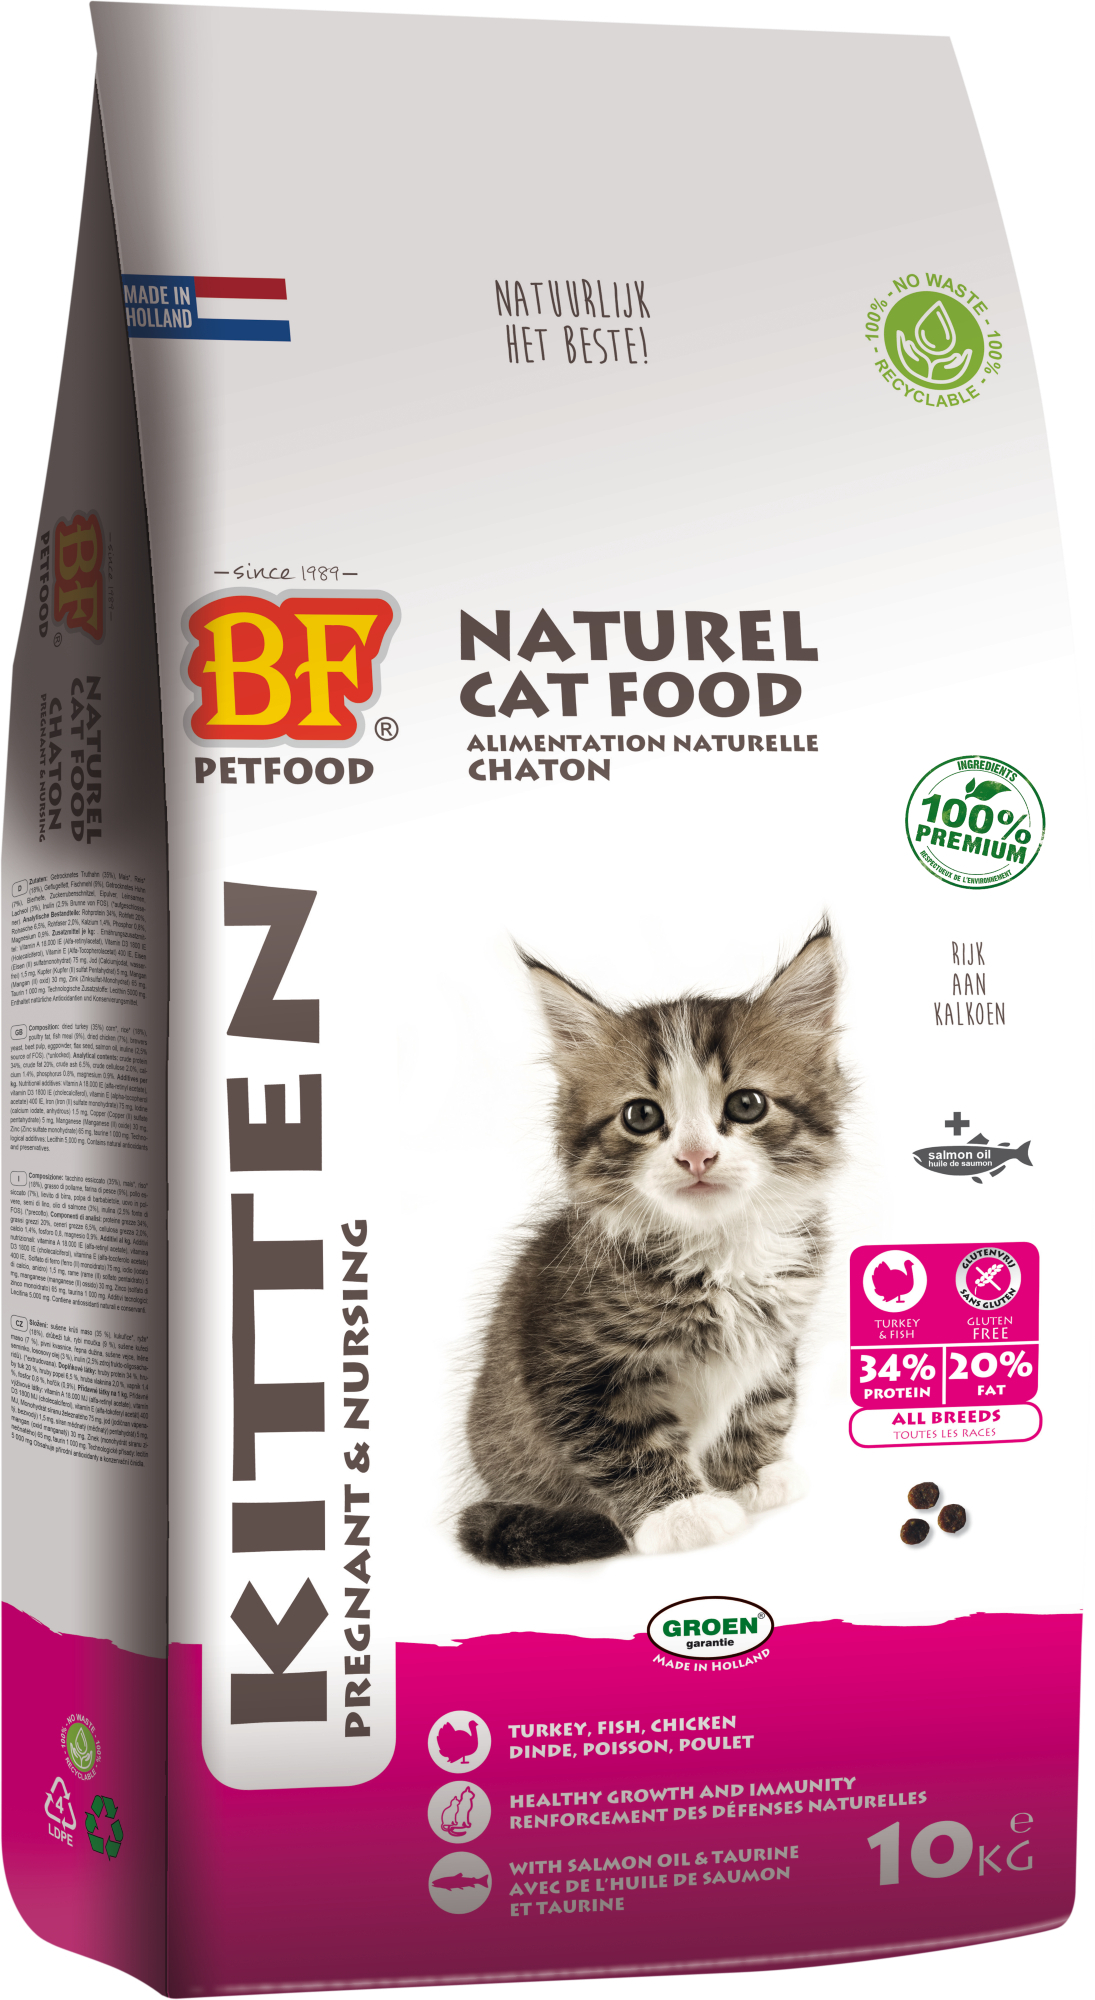 BIOFOOD Kitten Crocchette 100% Naturali al Tacchino per Gattini